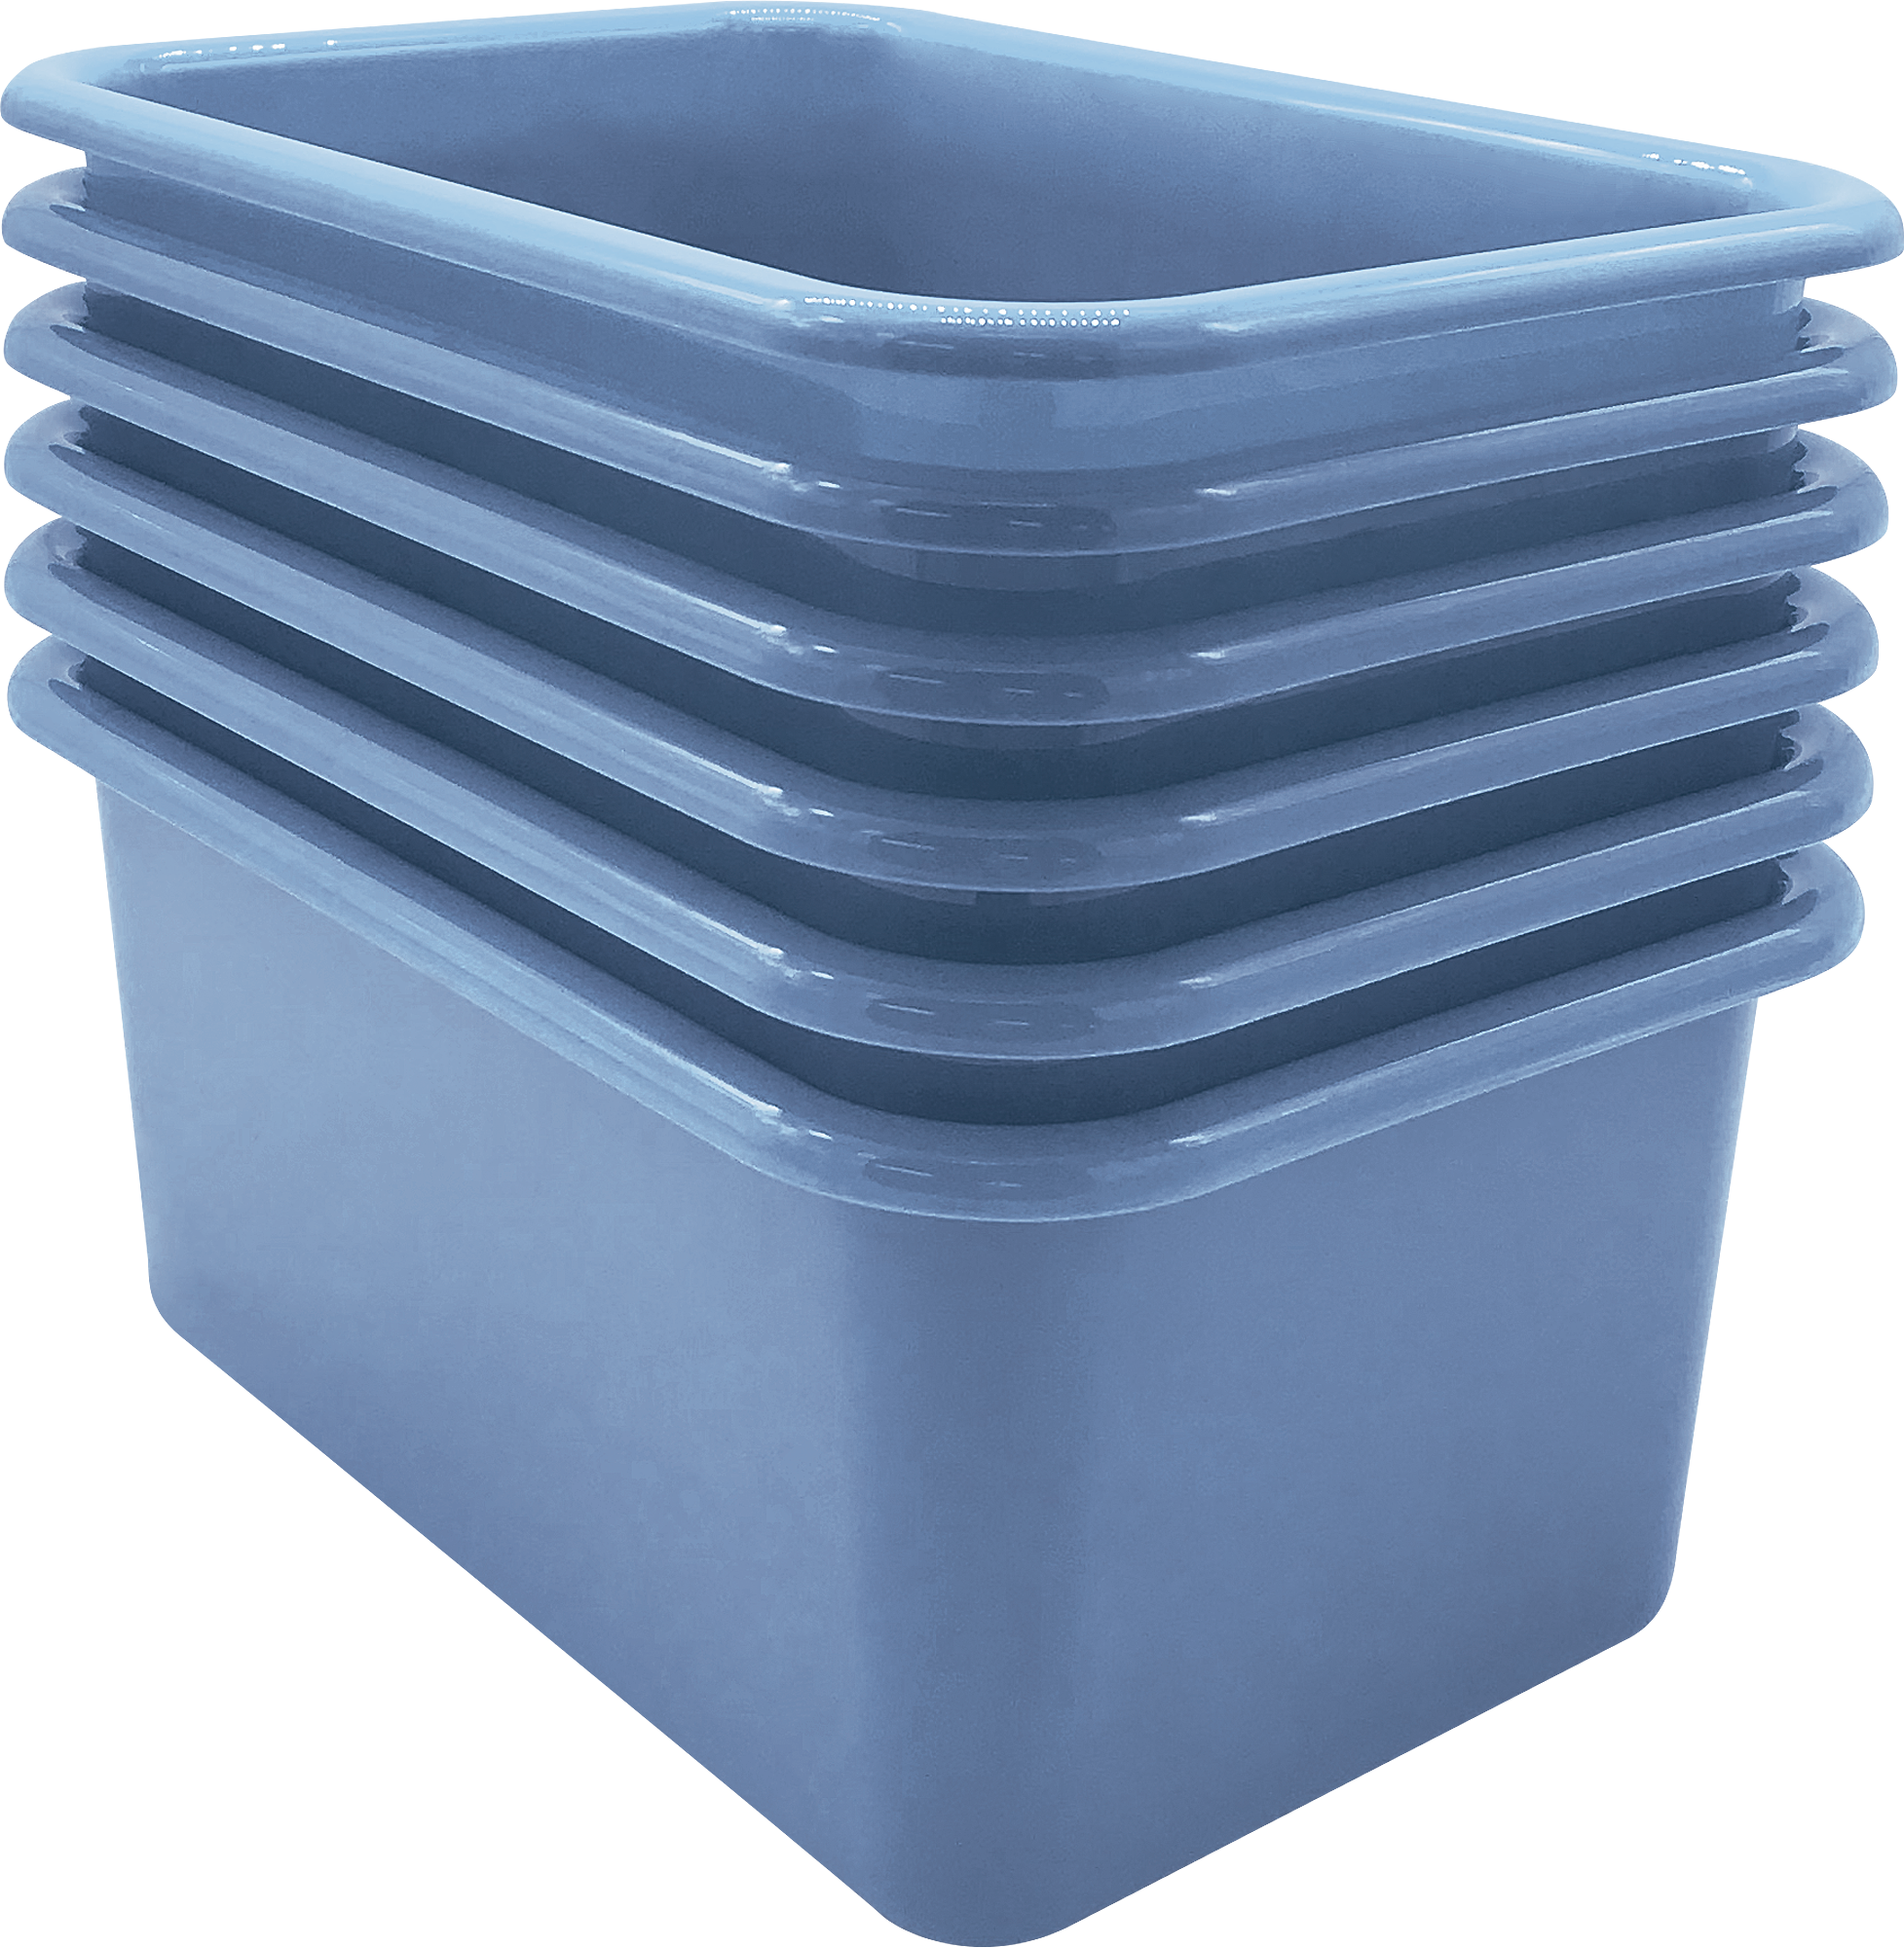 Blue Small Plastic Storage Bin - The School Box Inc